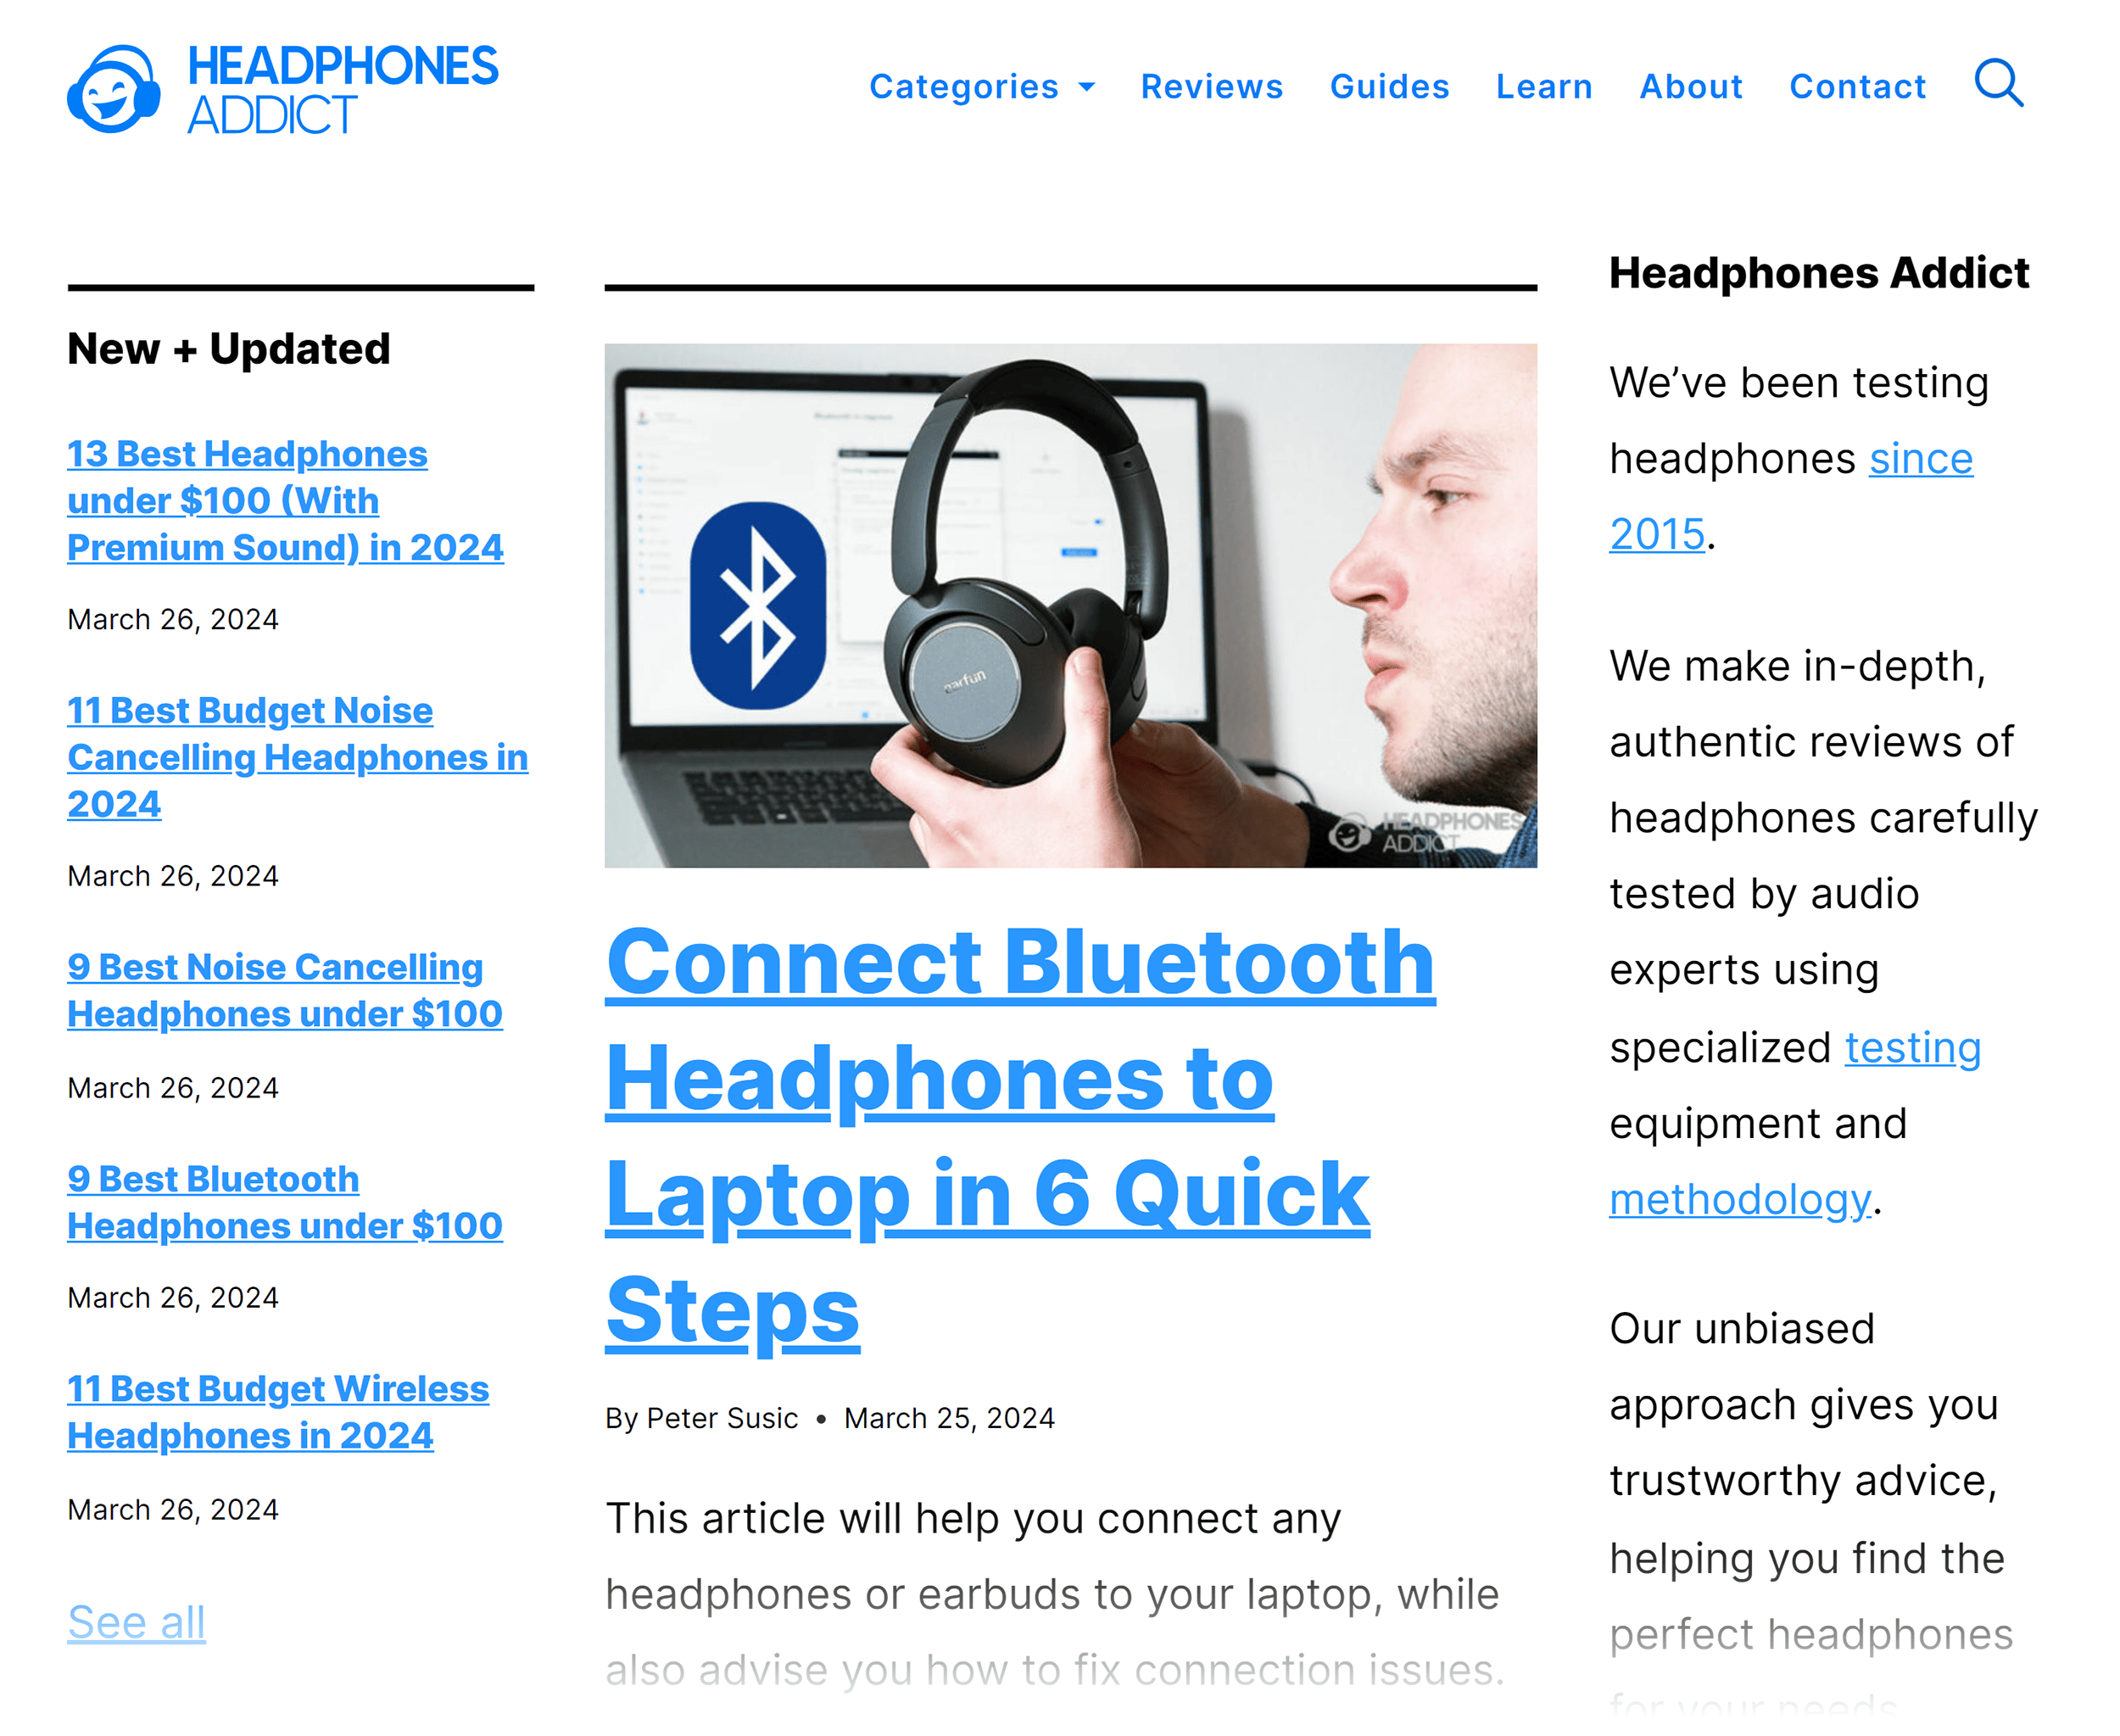 Headphones Addict